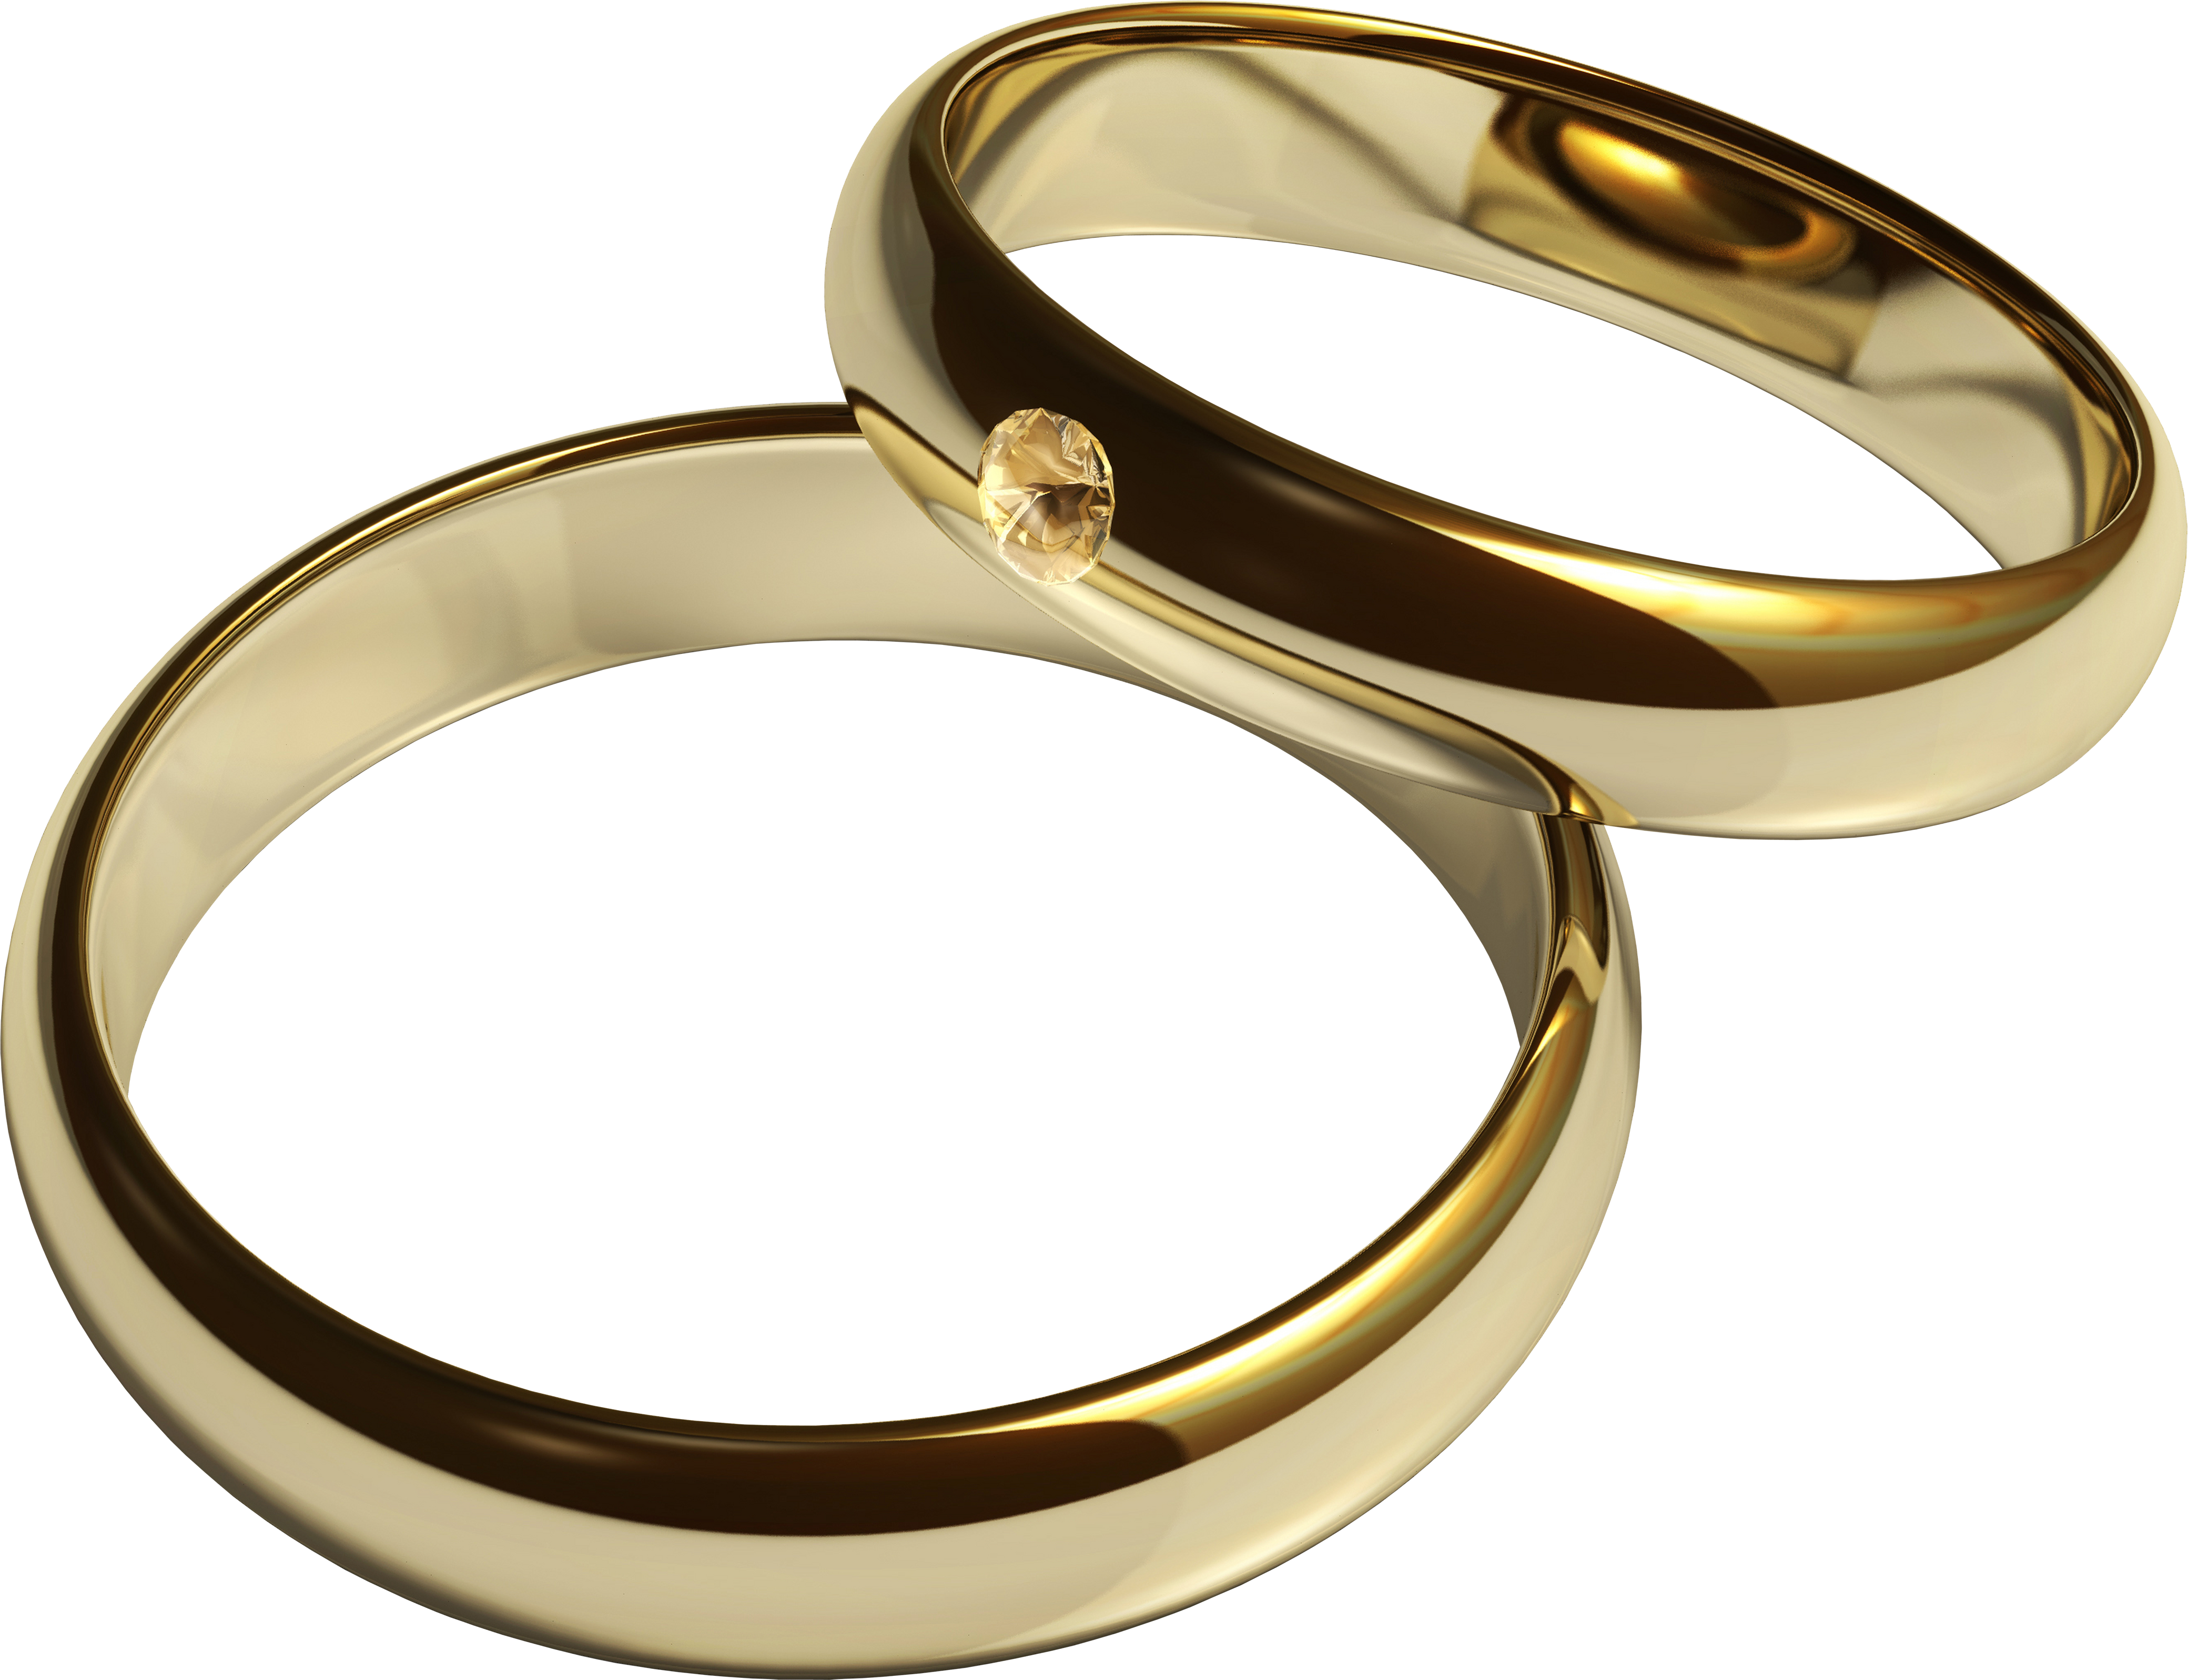 gold wedding ring png